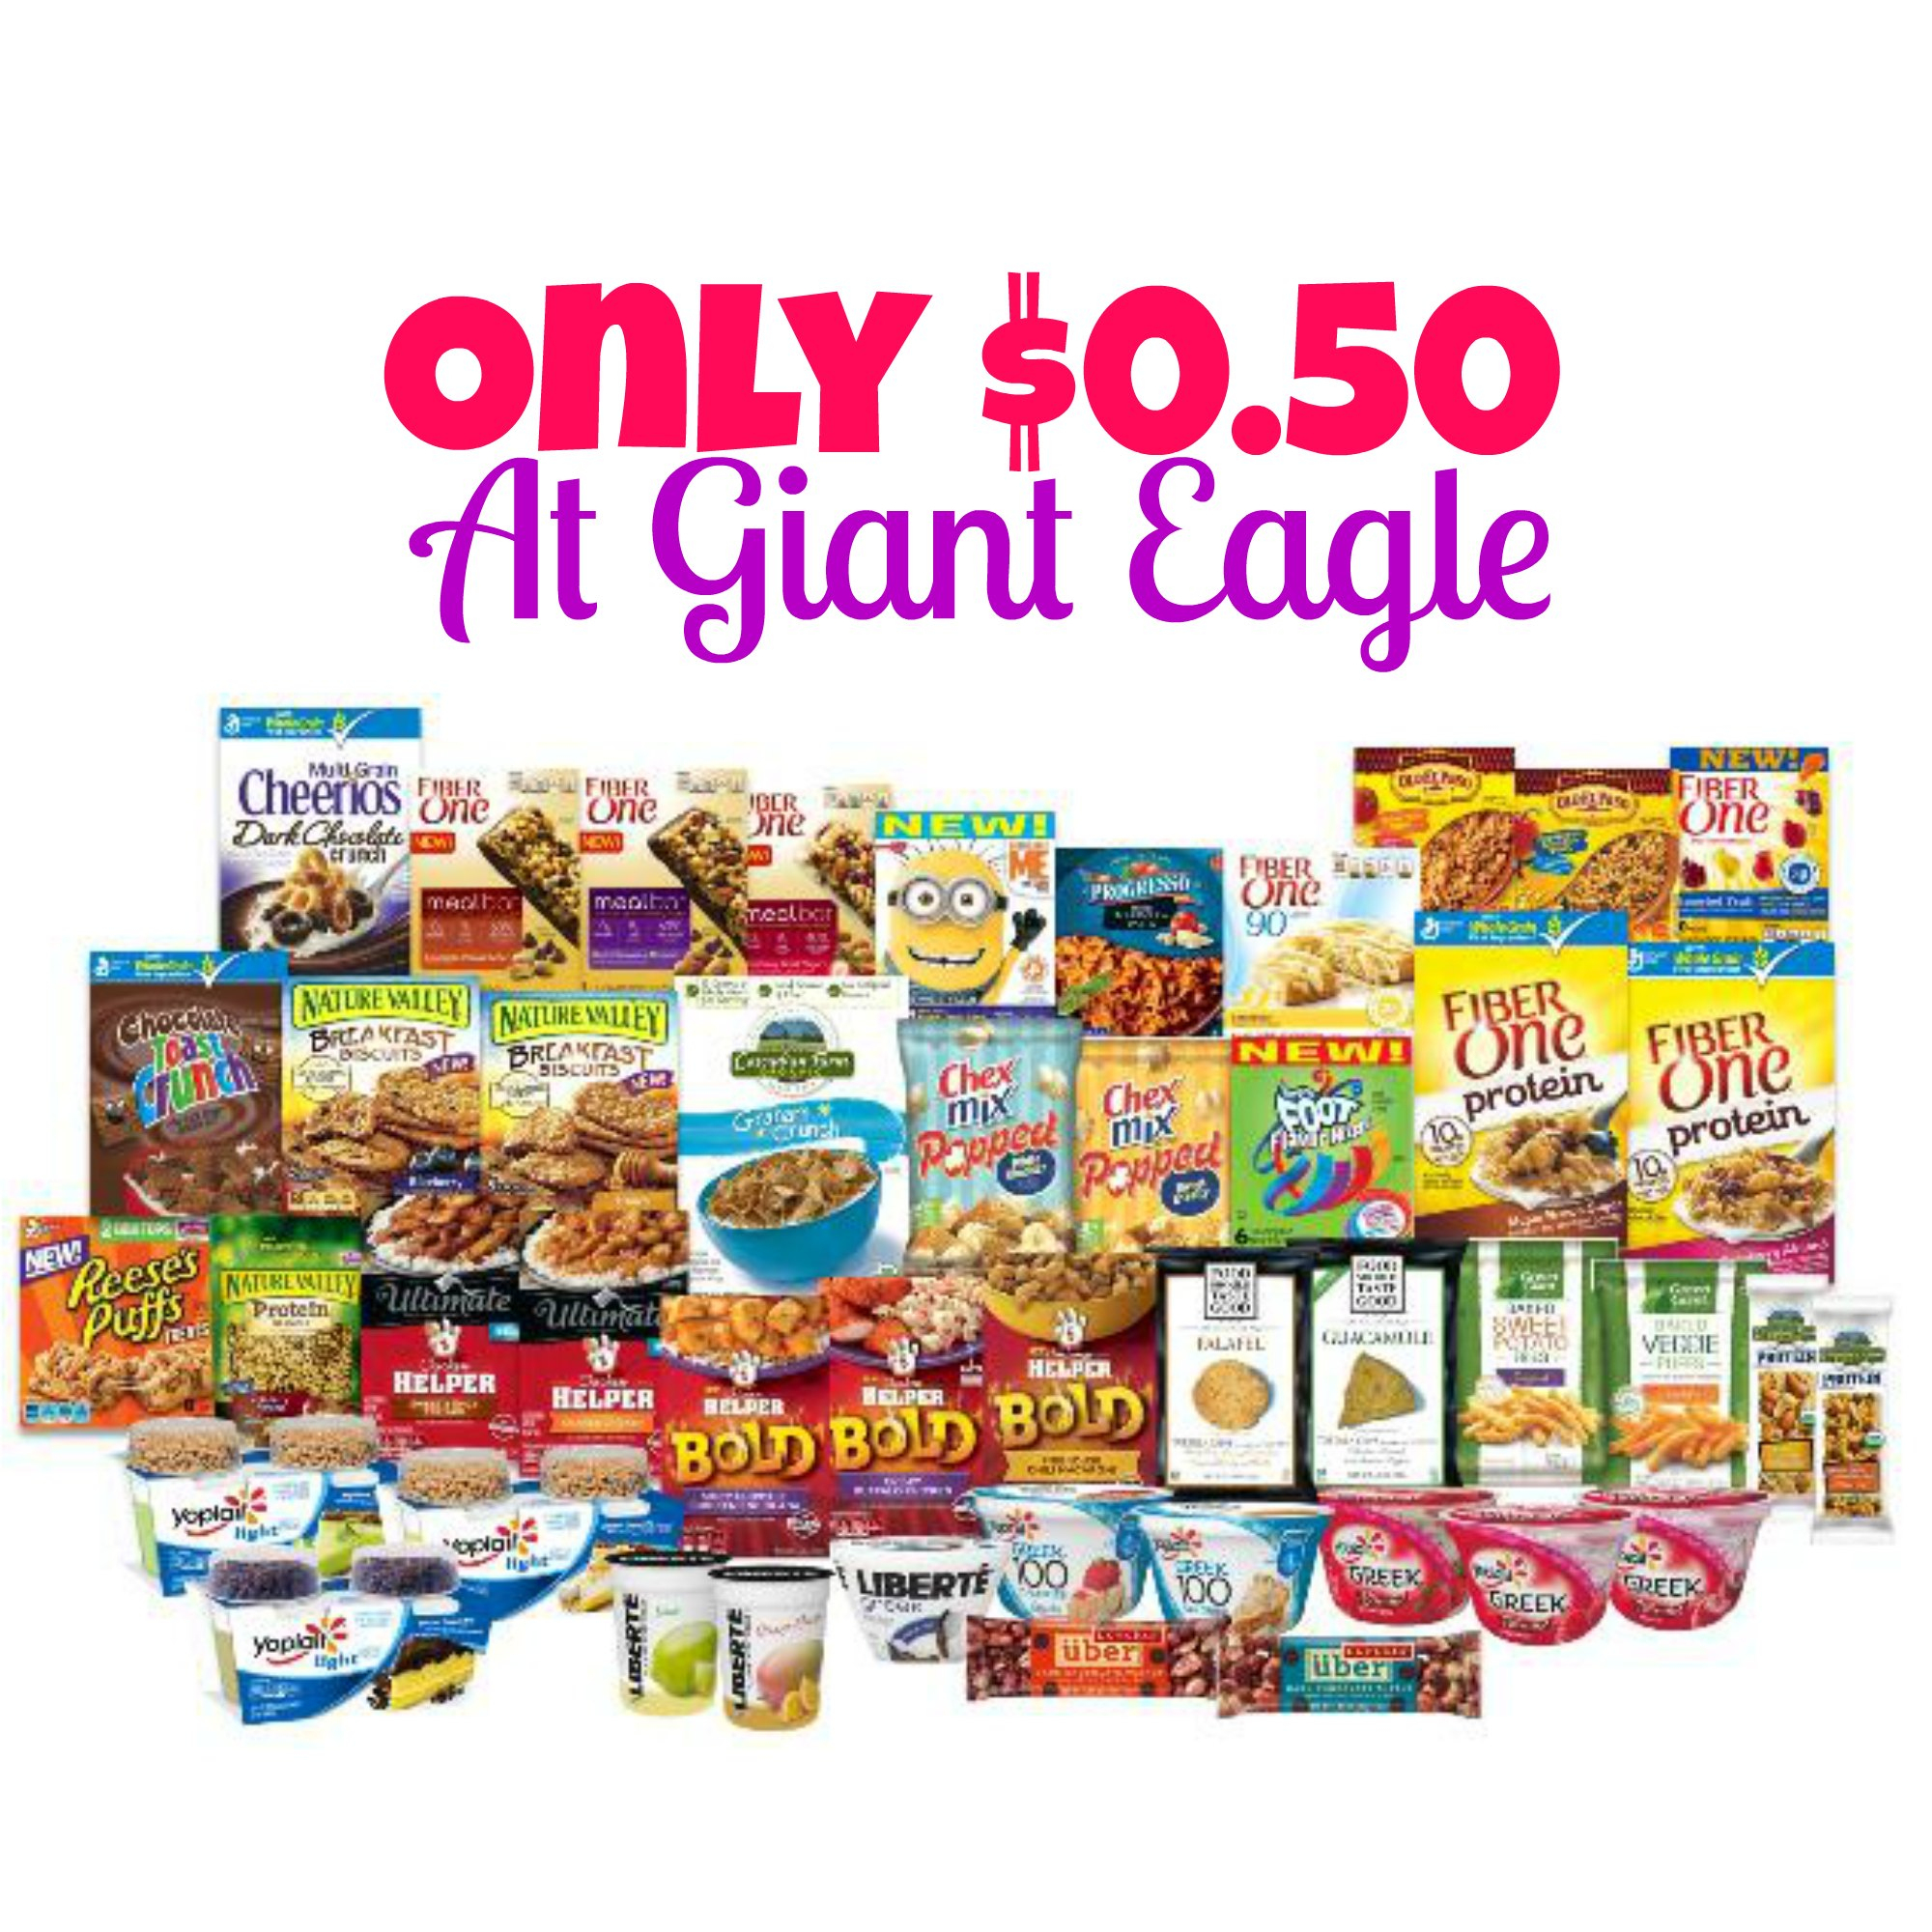 free-printable-giant-eagle-coupons